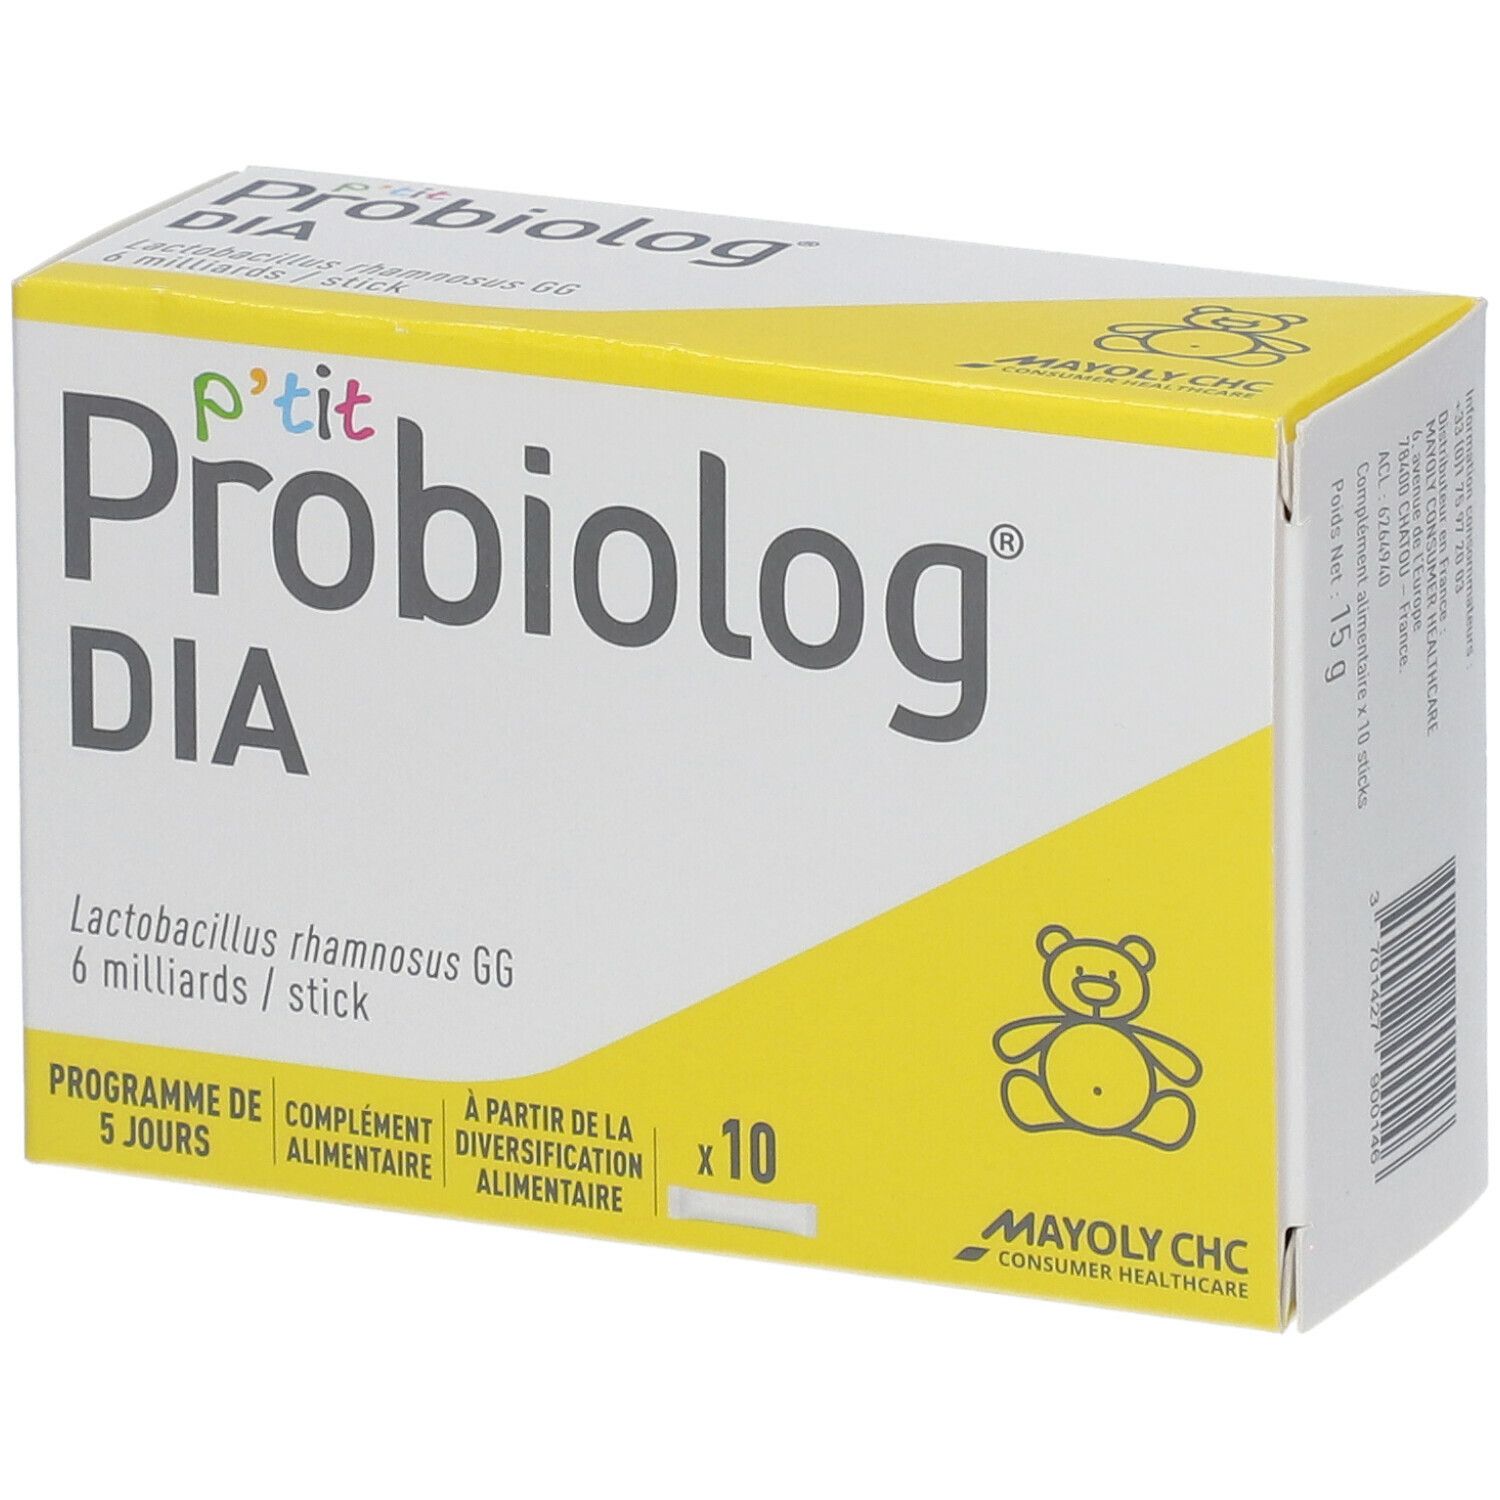 P'tit Probiolog® DIA